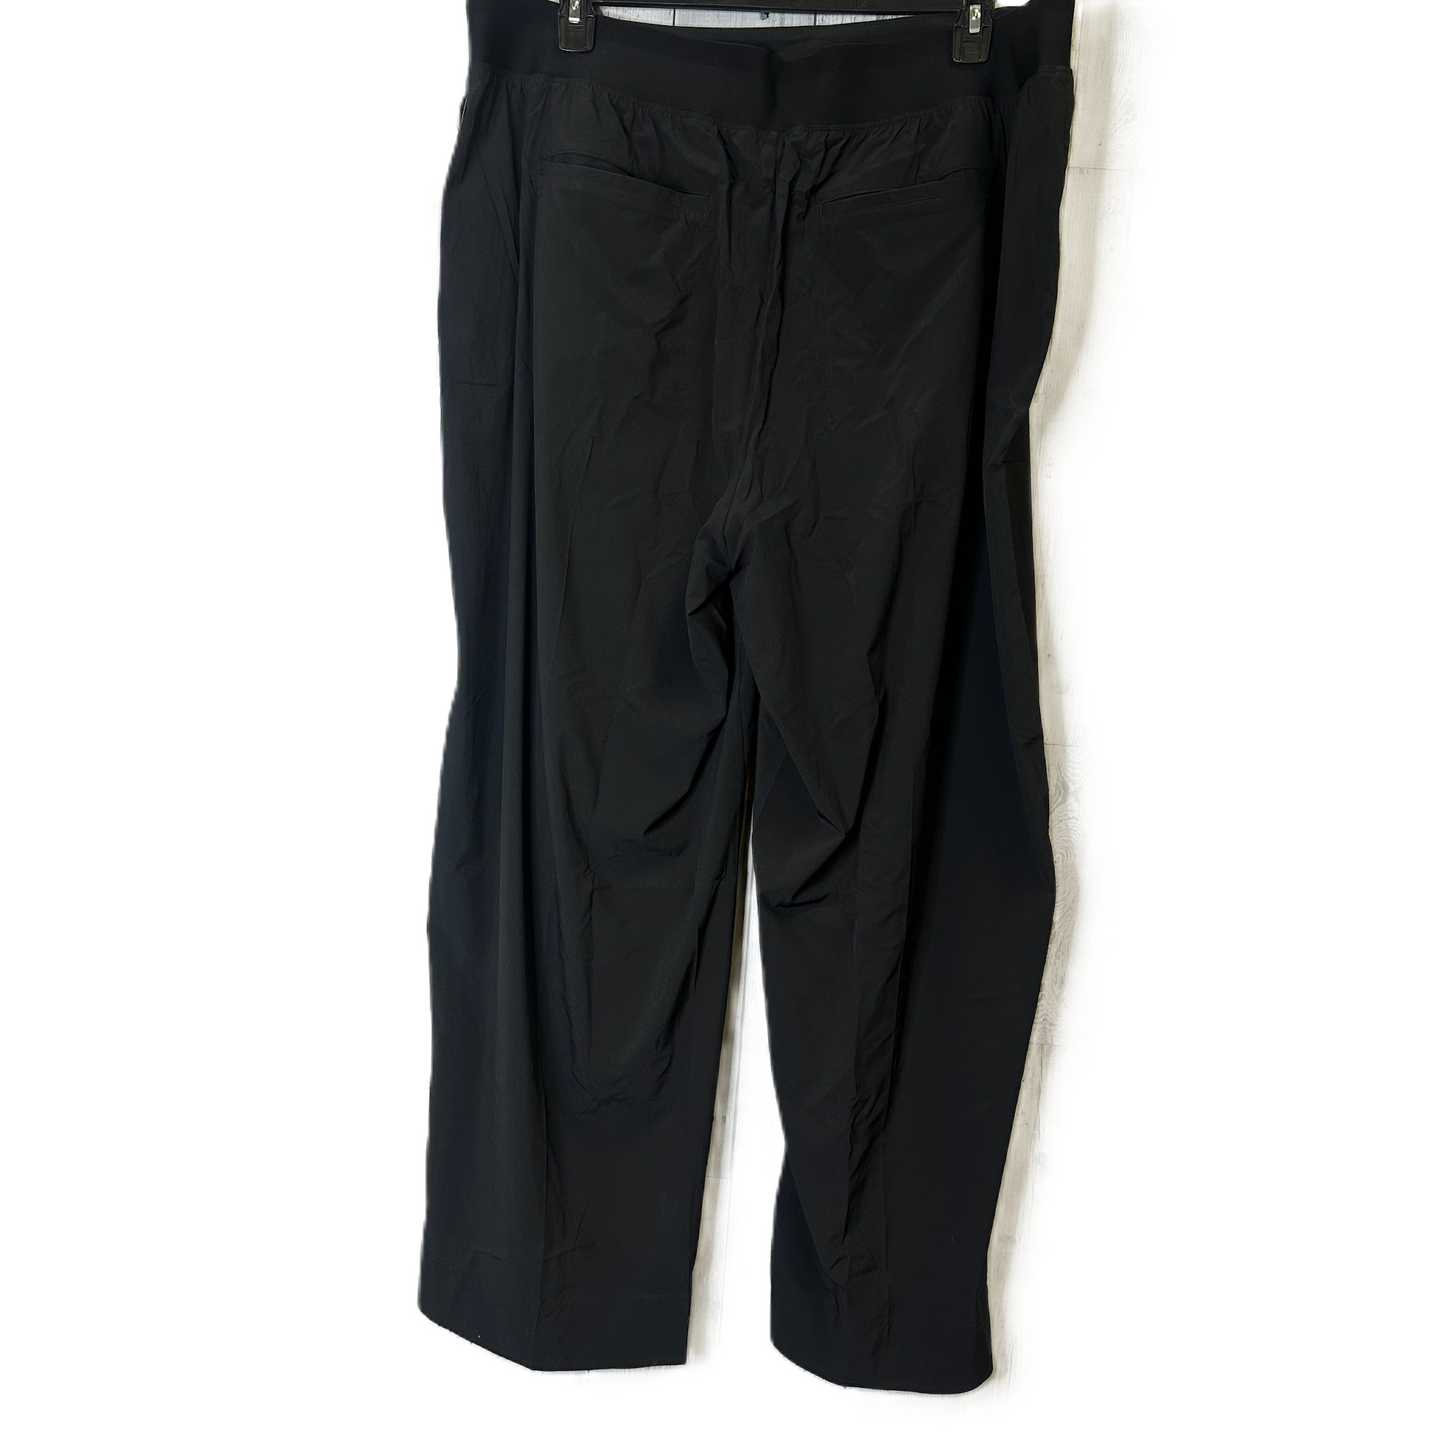 Black Athletic Pants By Athleta, Size: 3x